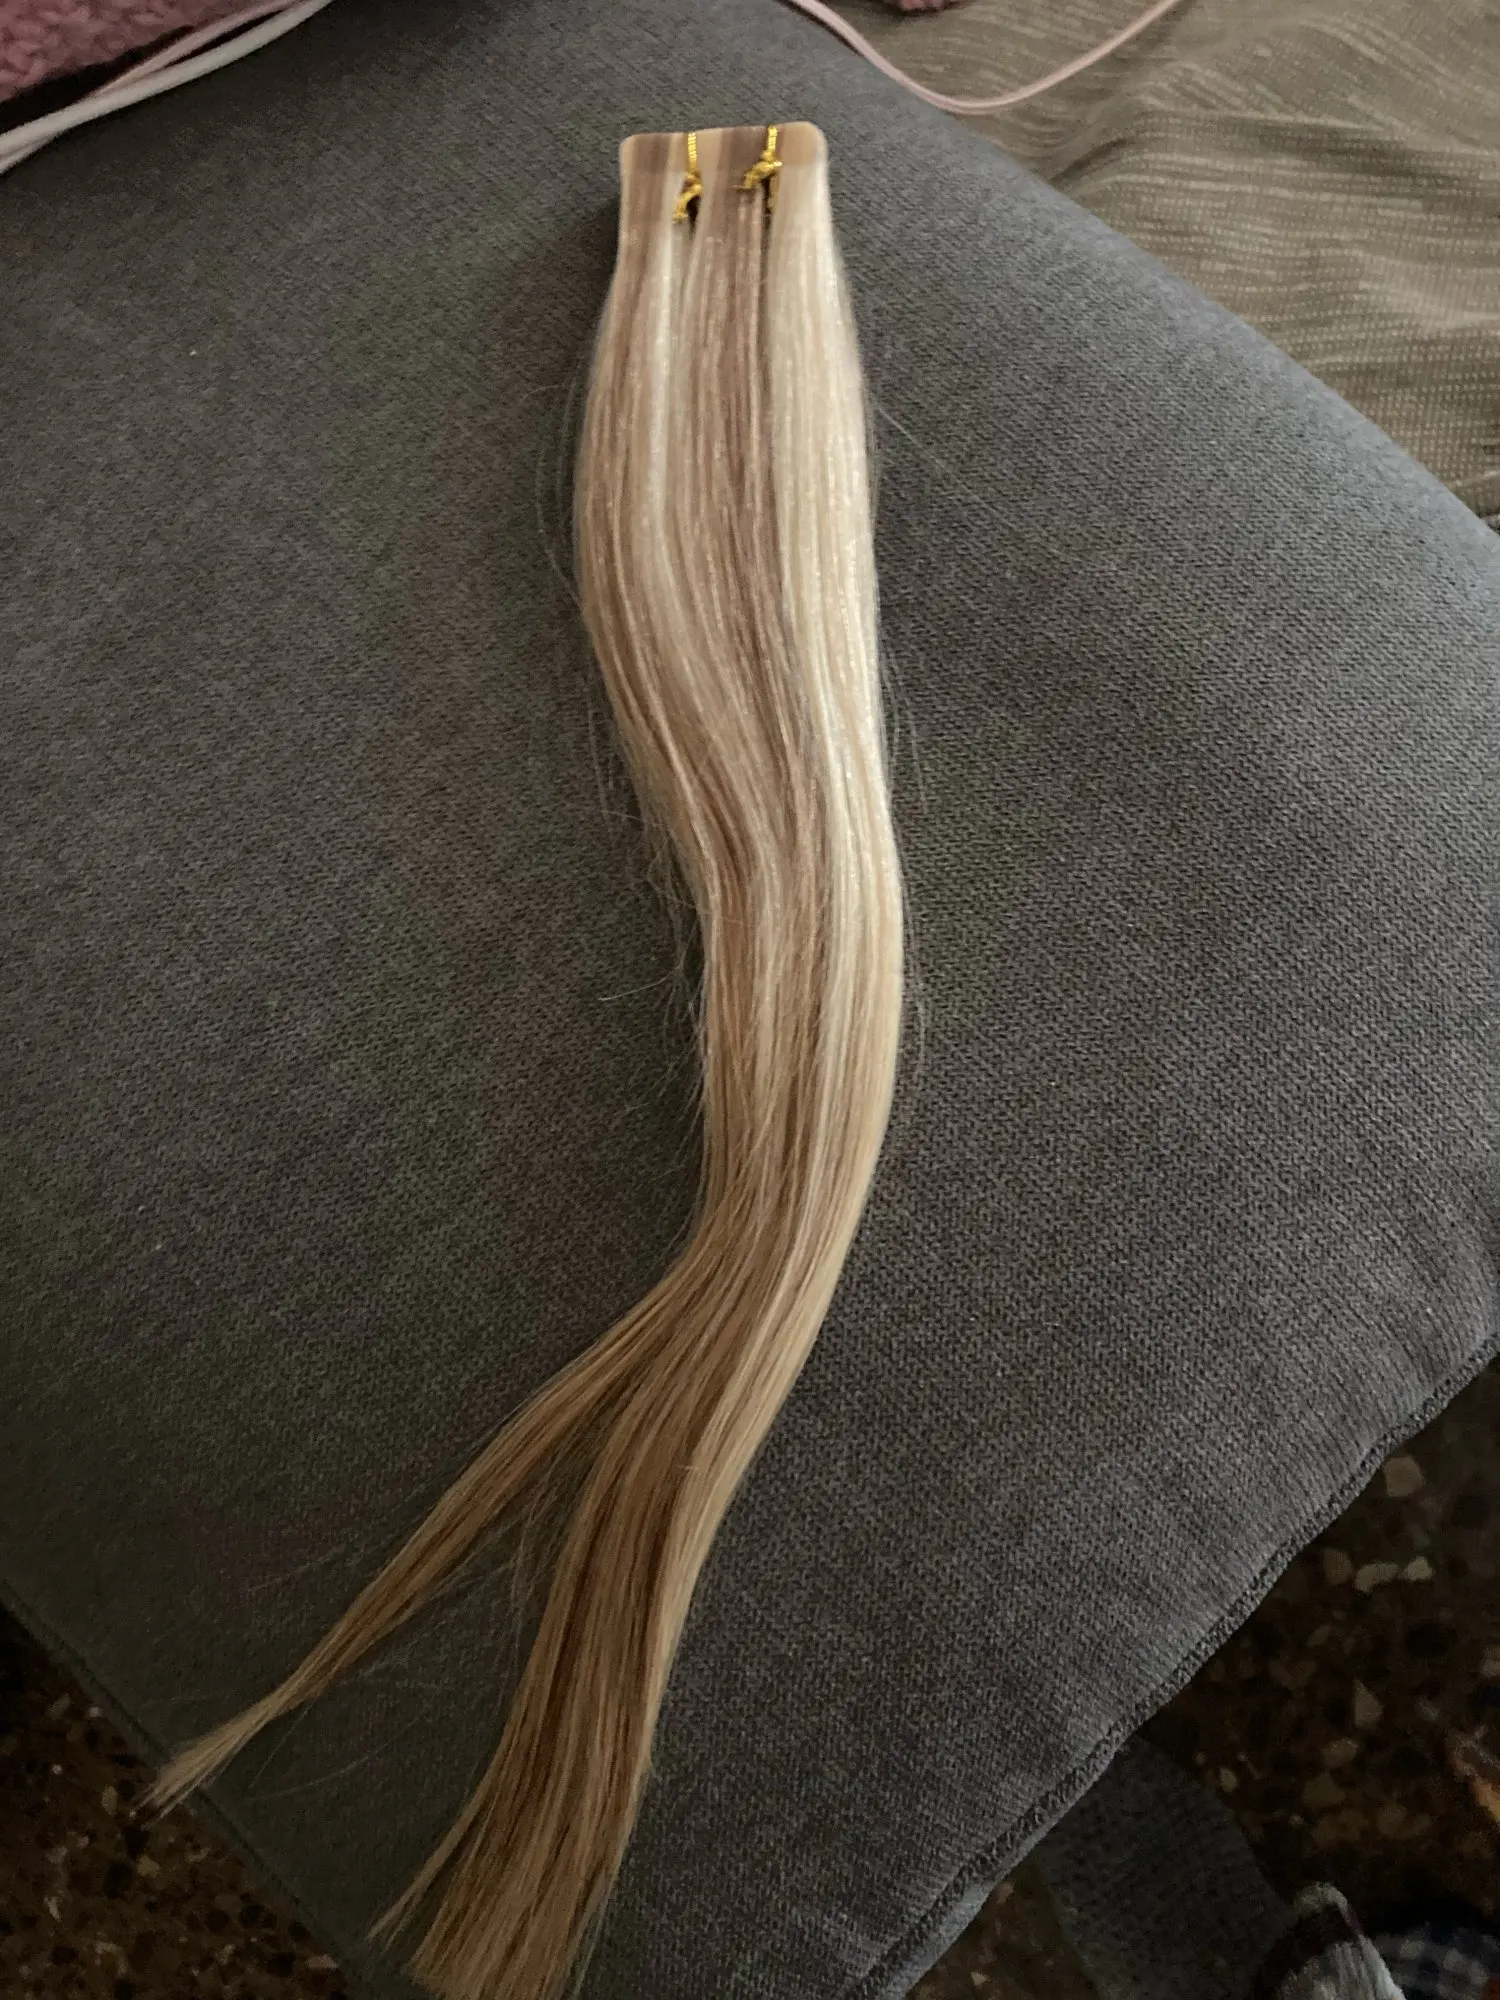 18″/45cm Tejp In Human Hair Extensions 20st European Remy Straight Adhensive Extension tejp på människohår photo review